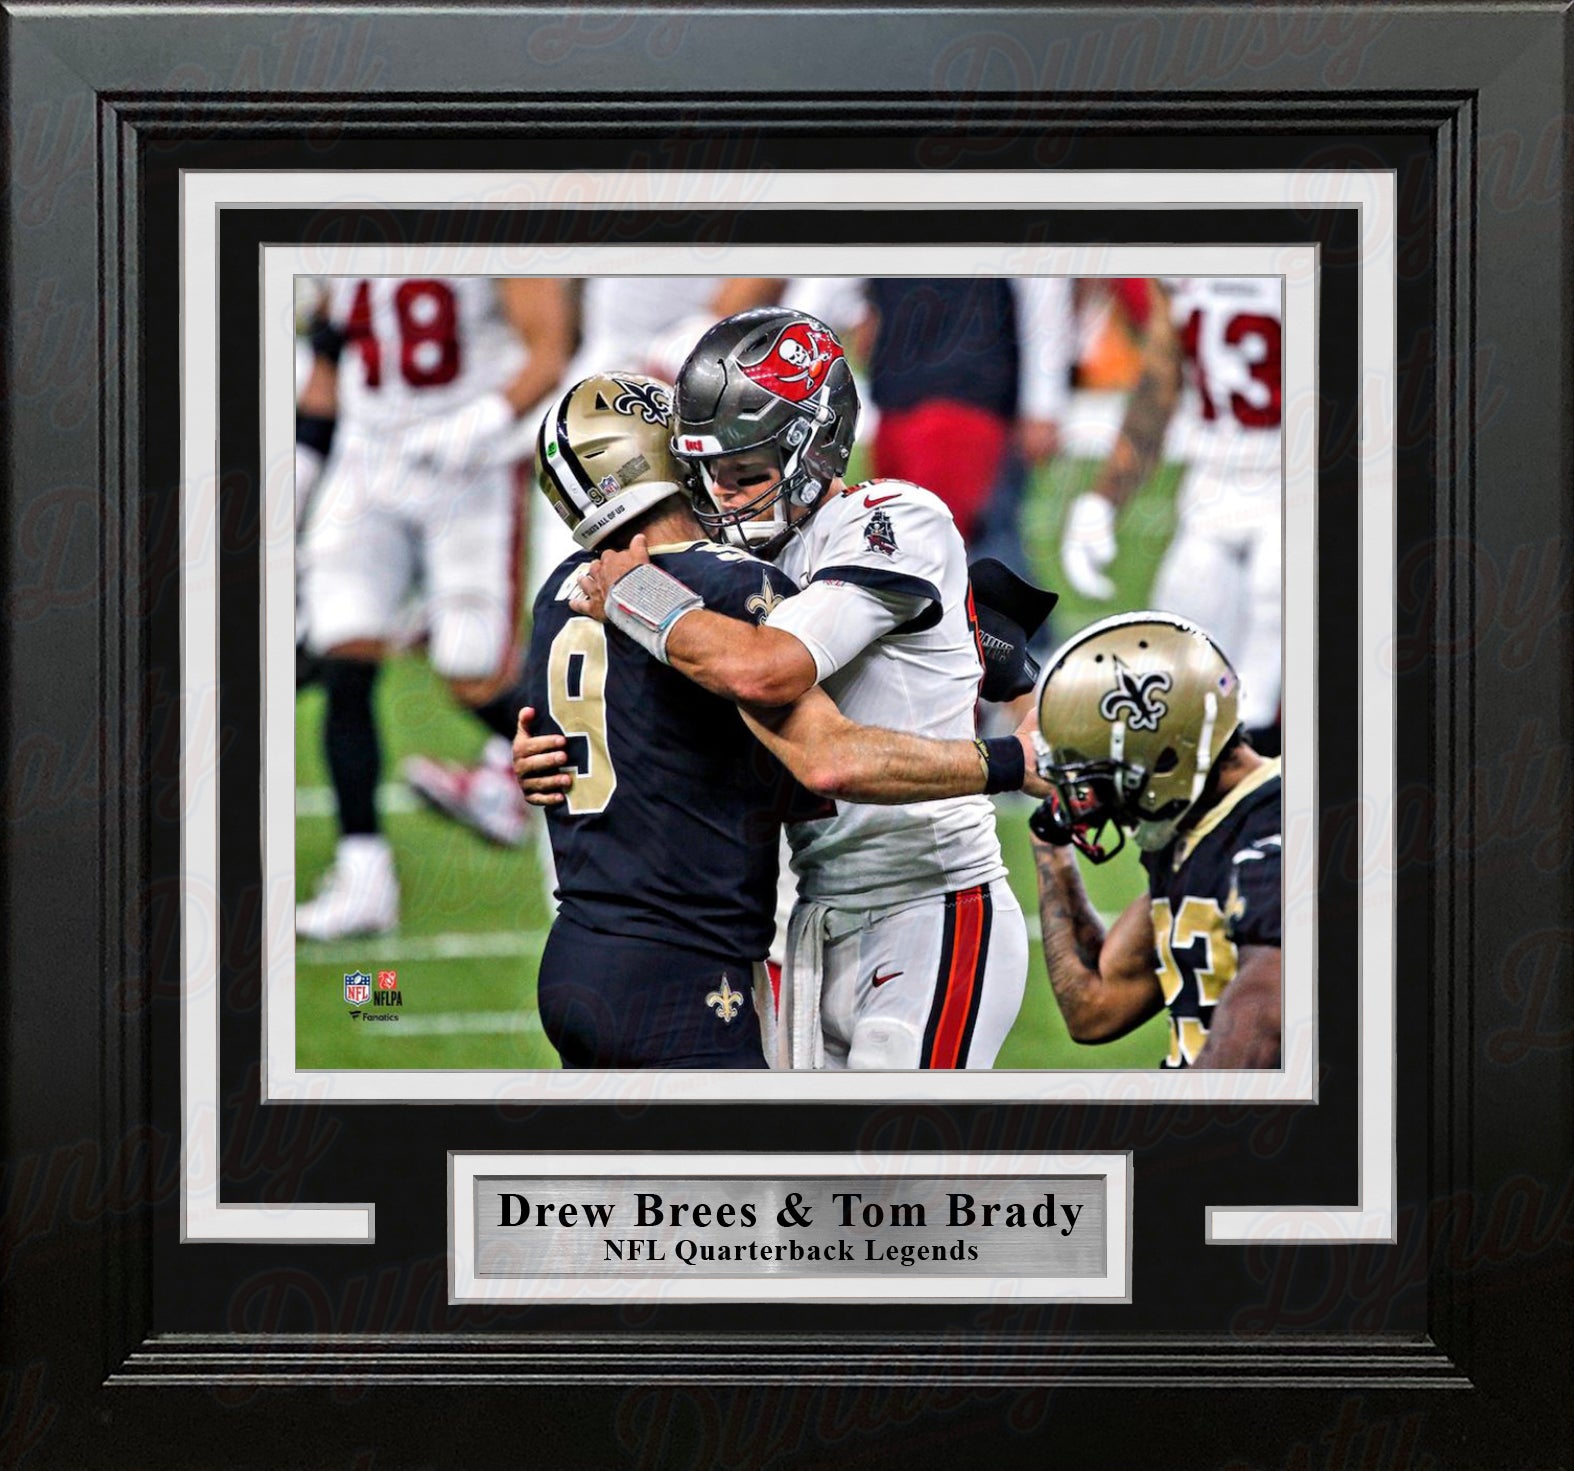 Drew Brees and Tom Brady 8" x 10" Framed Quarterback Legends Football Photo - Dynasty Sports & Framing 